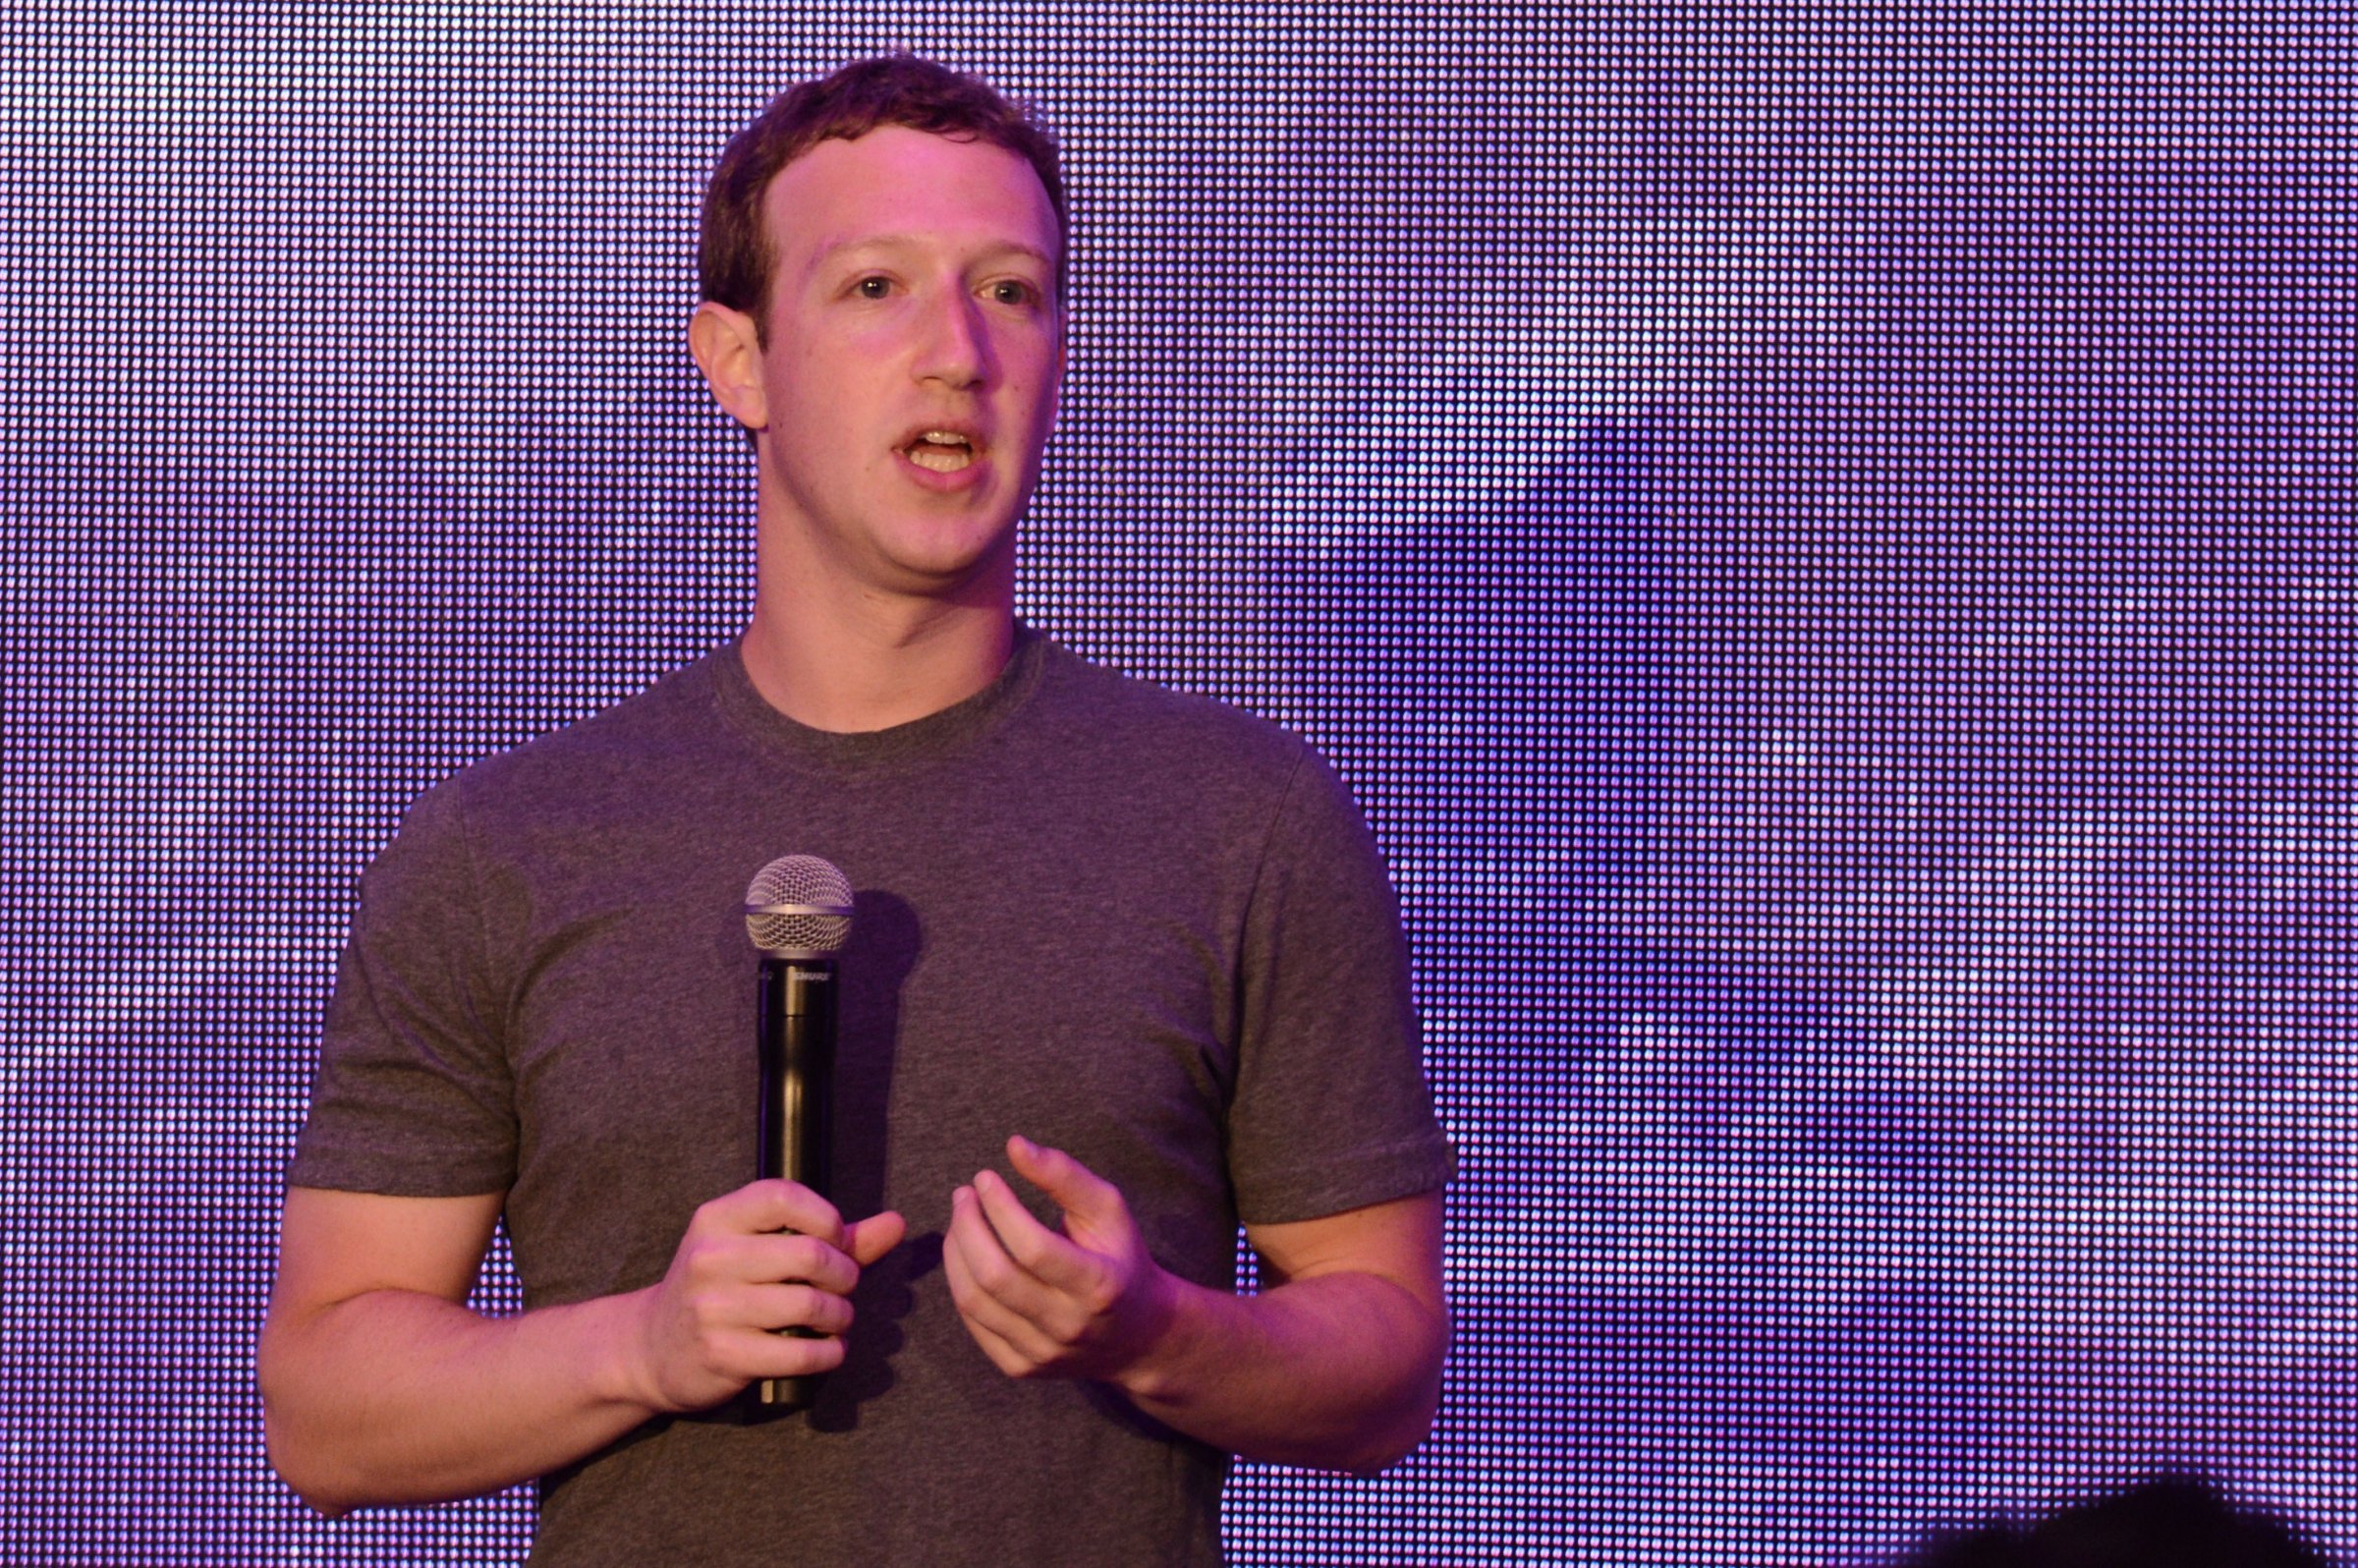 Facebook founder Mark Zuckerberg delivers a speech in Jakarta on October 13, 2014.